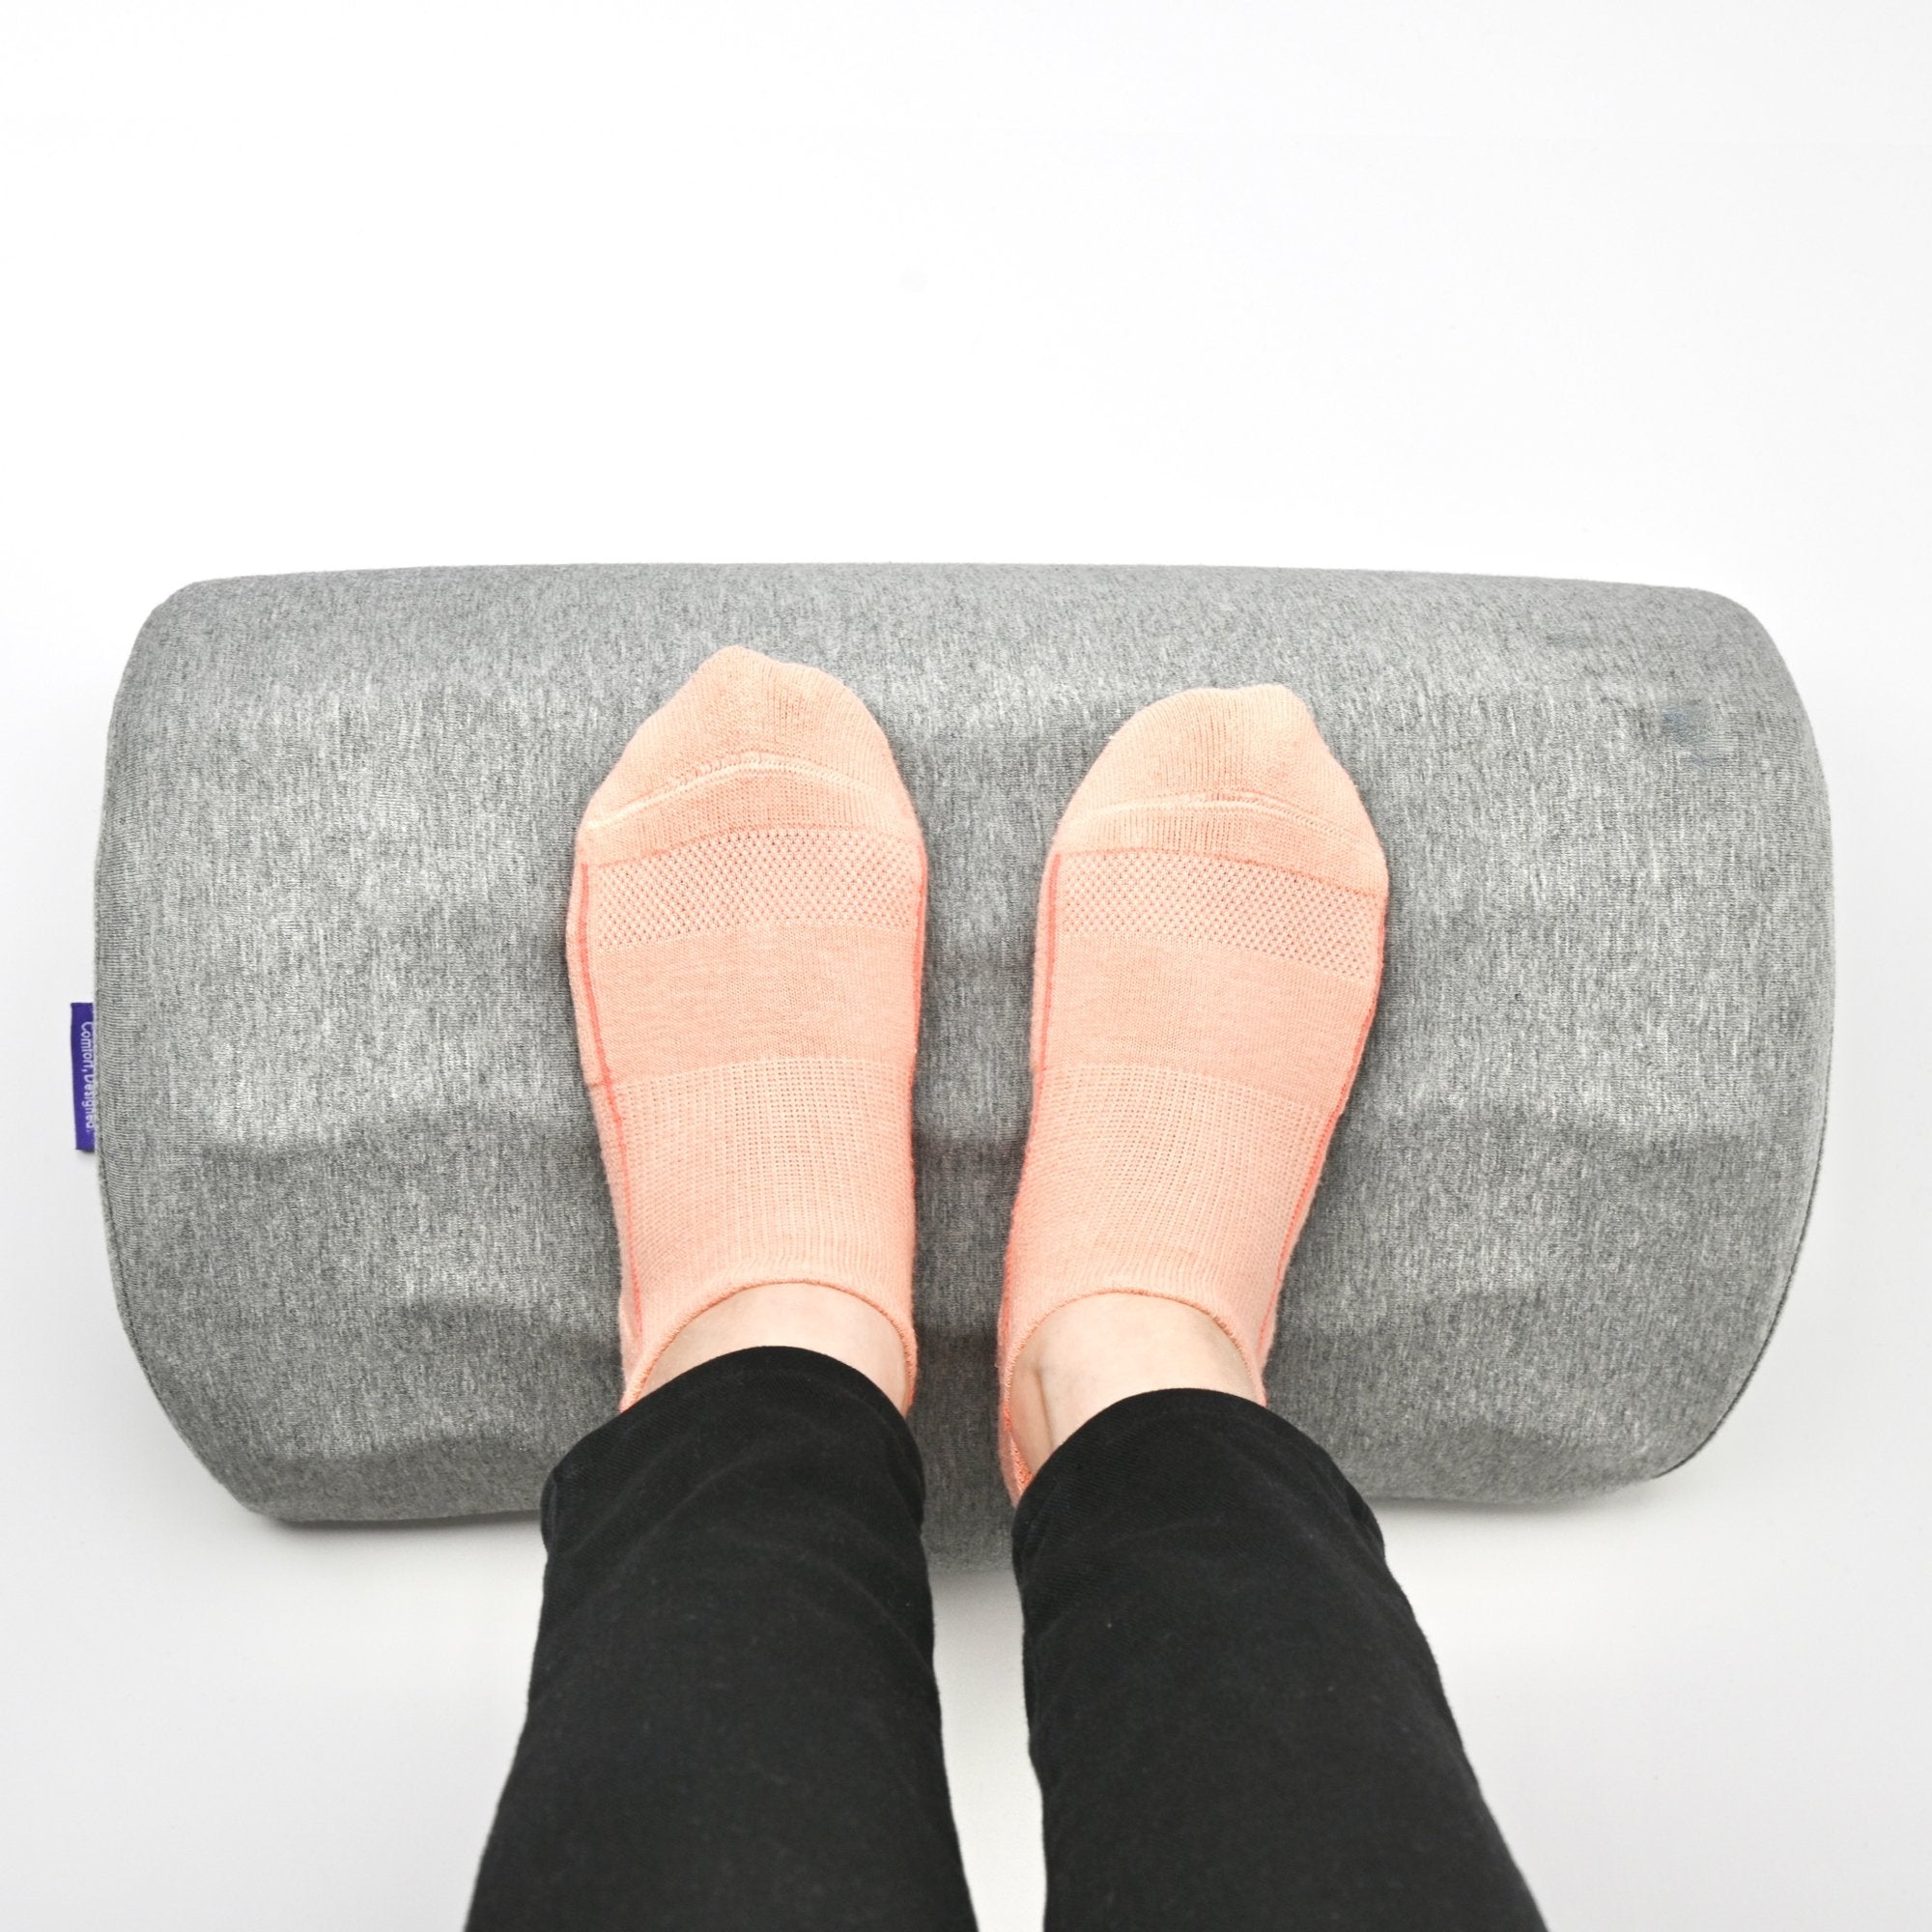 Feet Cushion Under Desk Sponge Ergonomic Feet Pillow Cushion